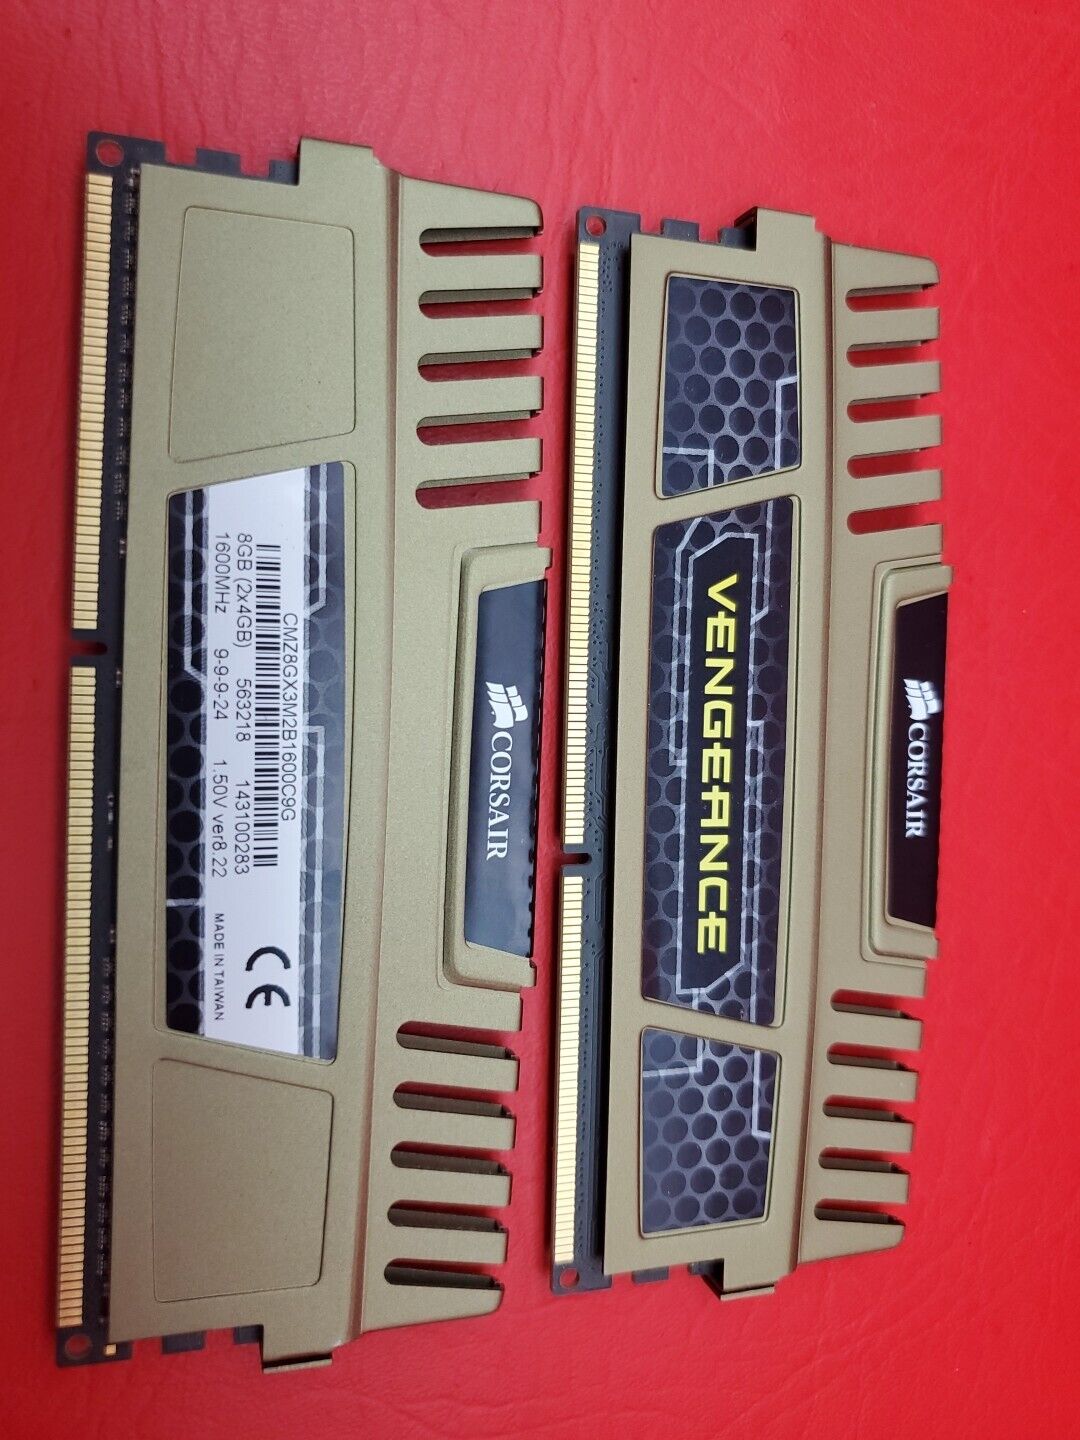 (2 Piece) Corsair Vengeance CMZ8GX3M2B1600C9G DDR3-1600 8GB (2x4GB) RAM